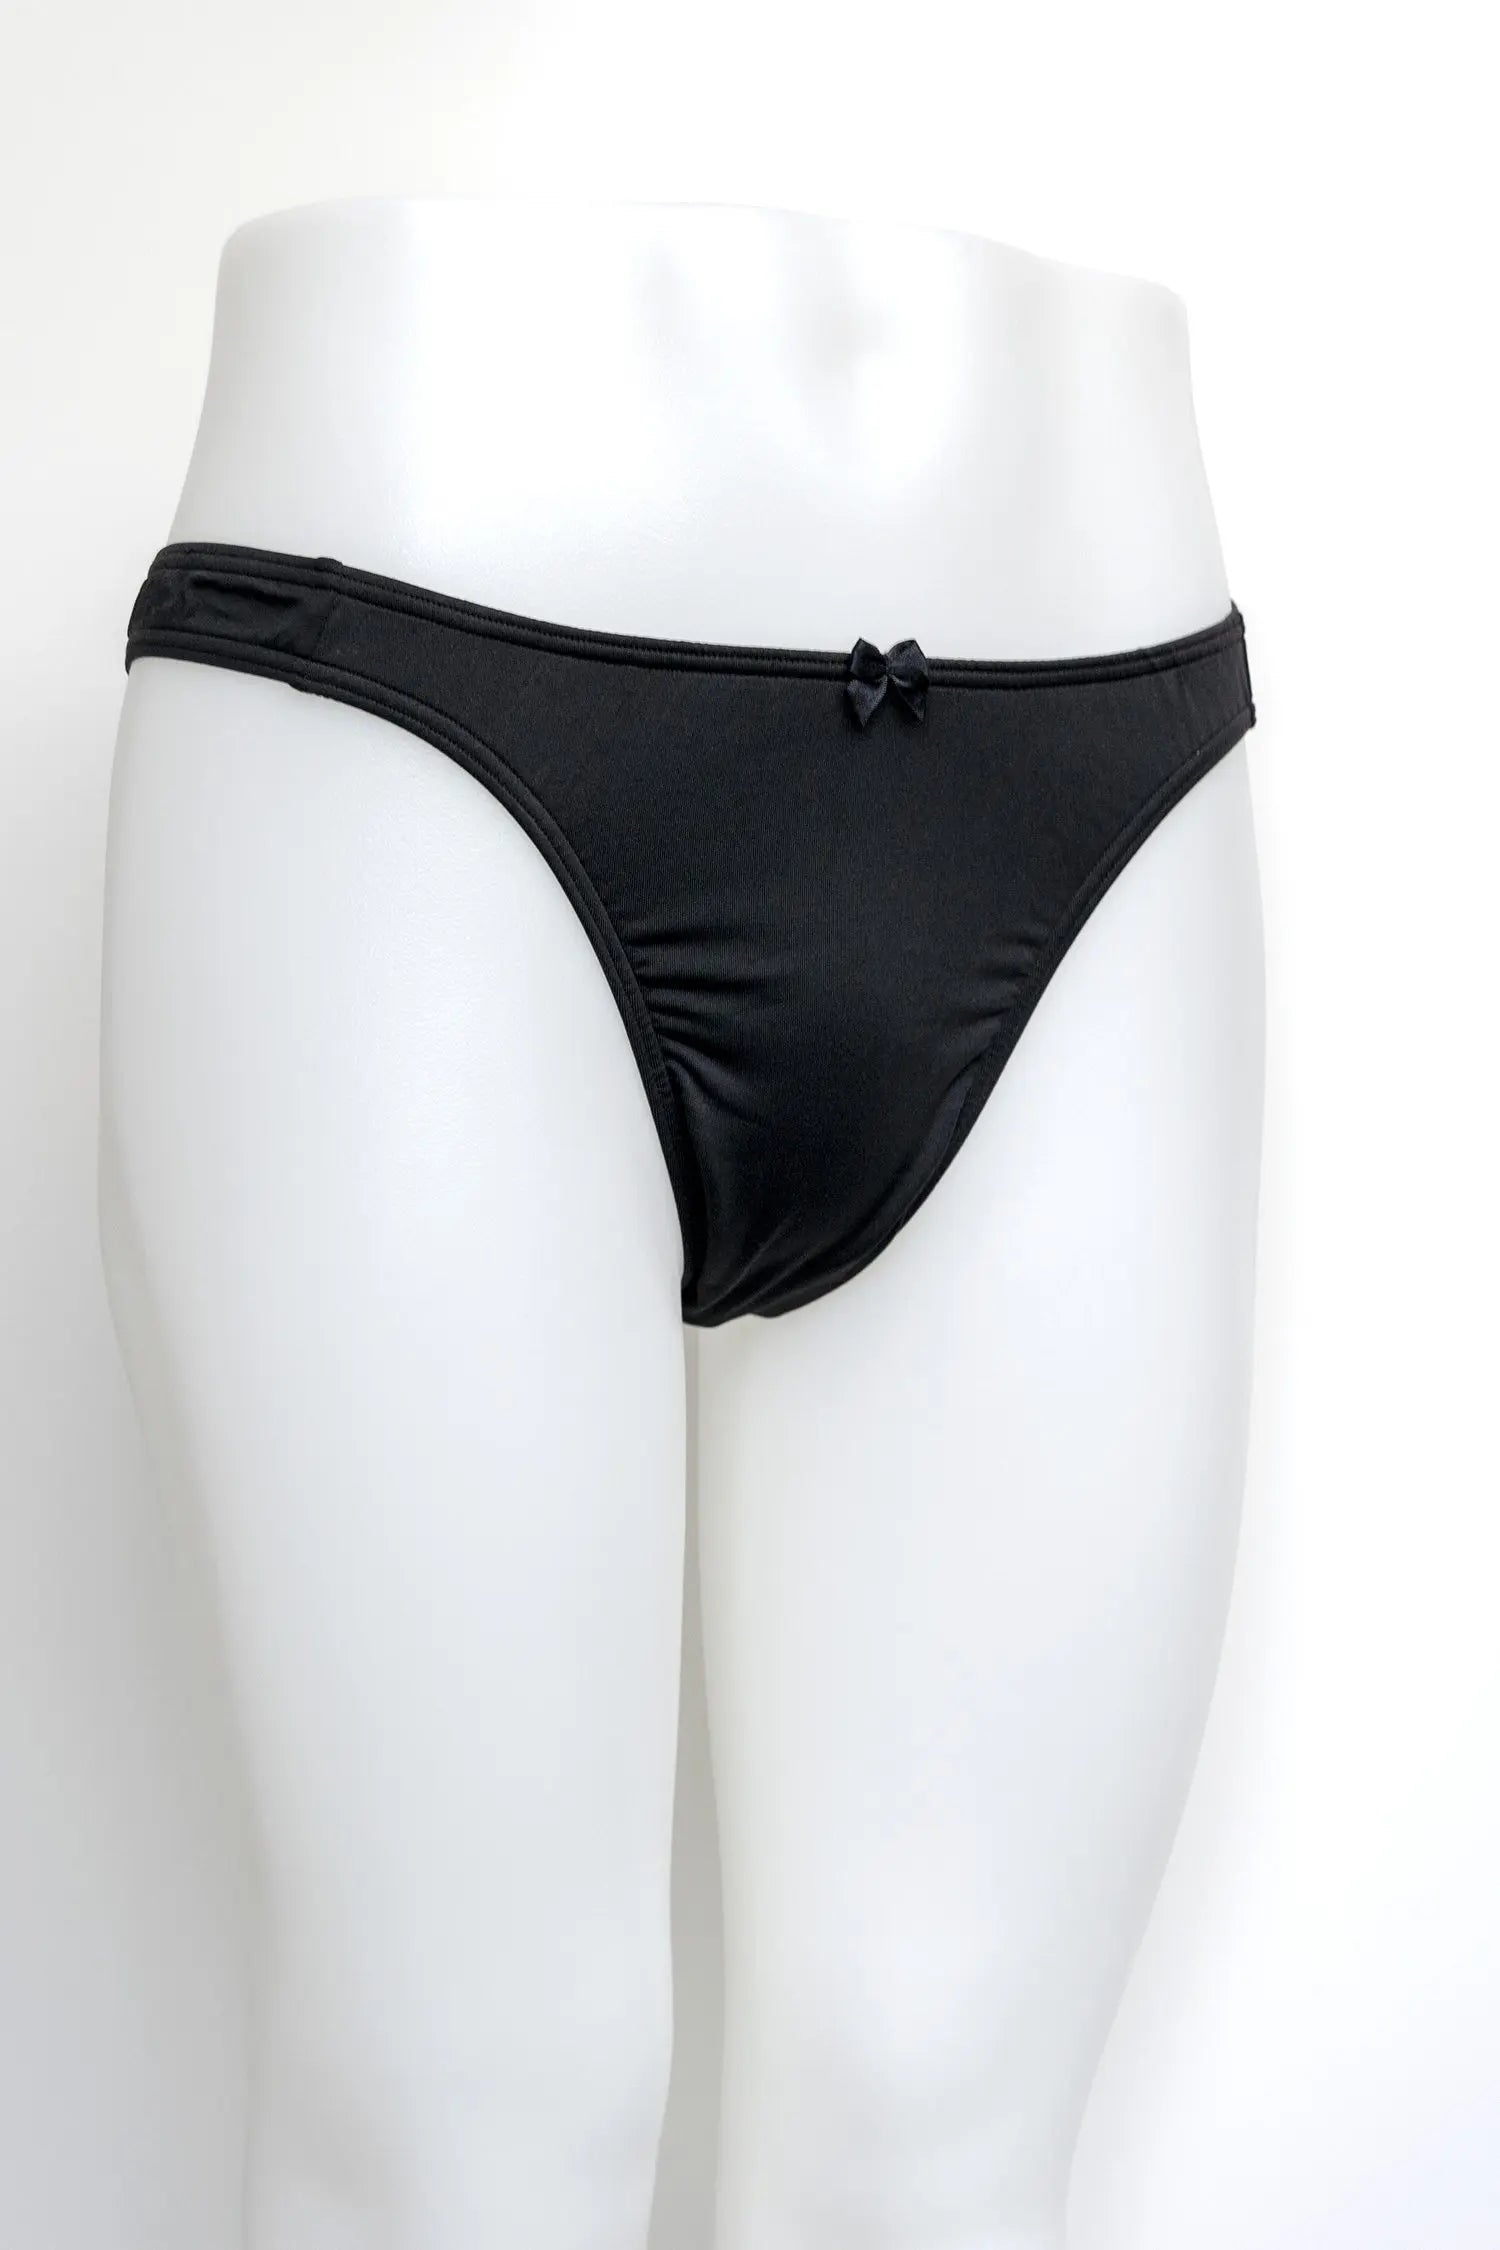 Gaff / Tucking Underwear - Hipster - Origami Customs - shop enby